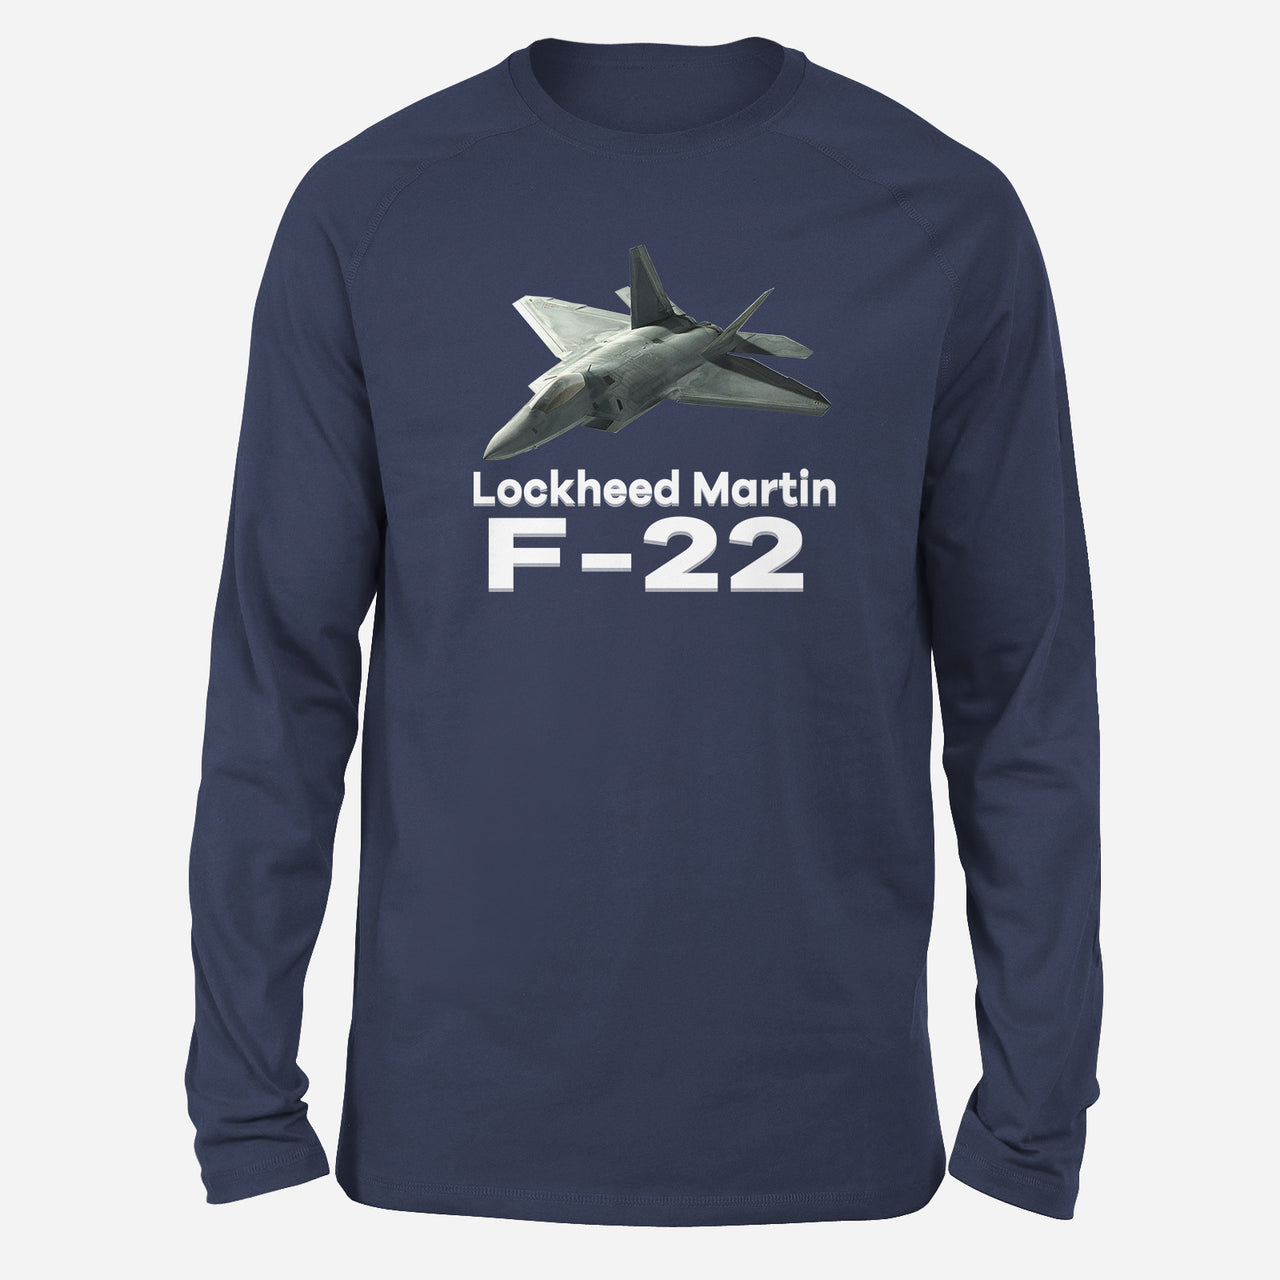 The Lockheed Martin F22 Designed Long-Sleeve T-Shirts